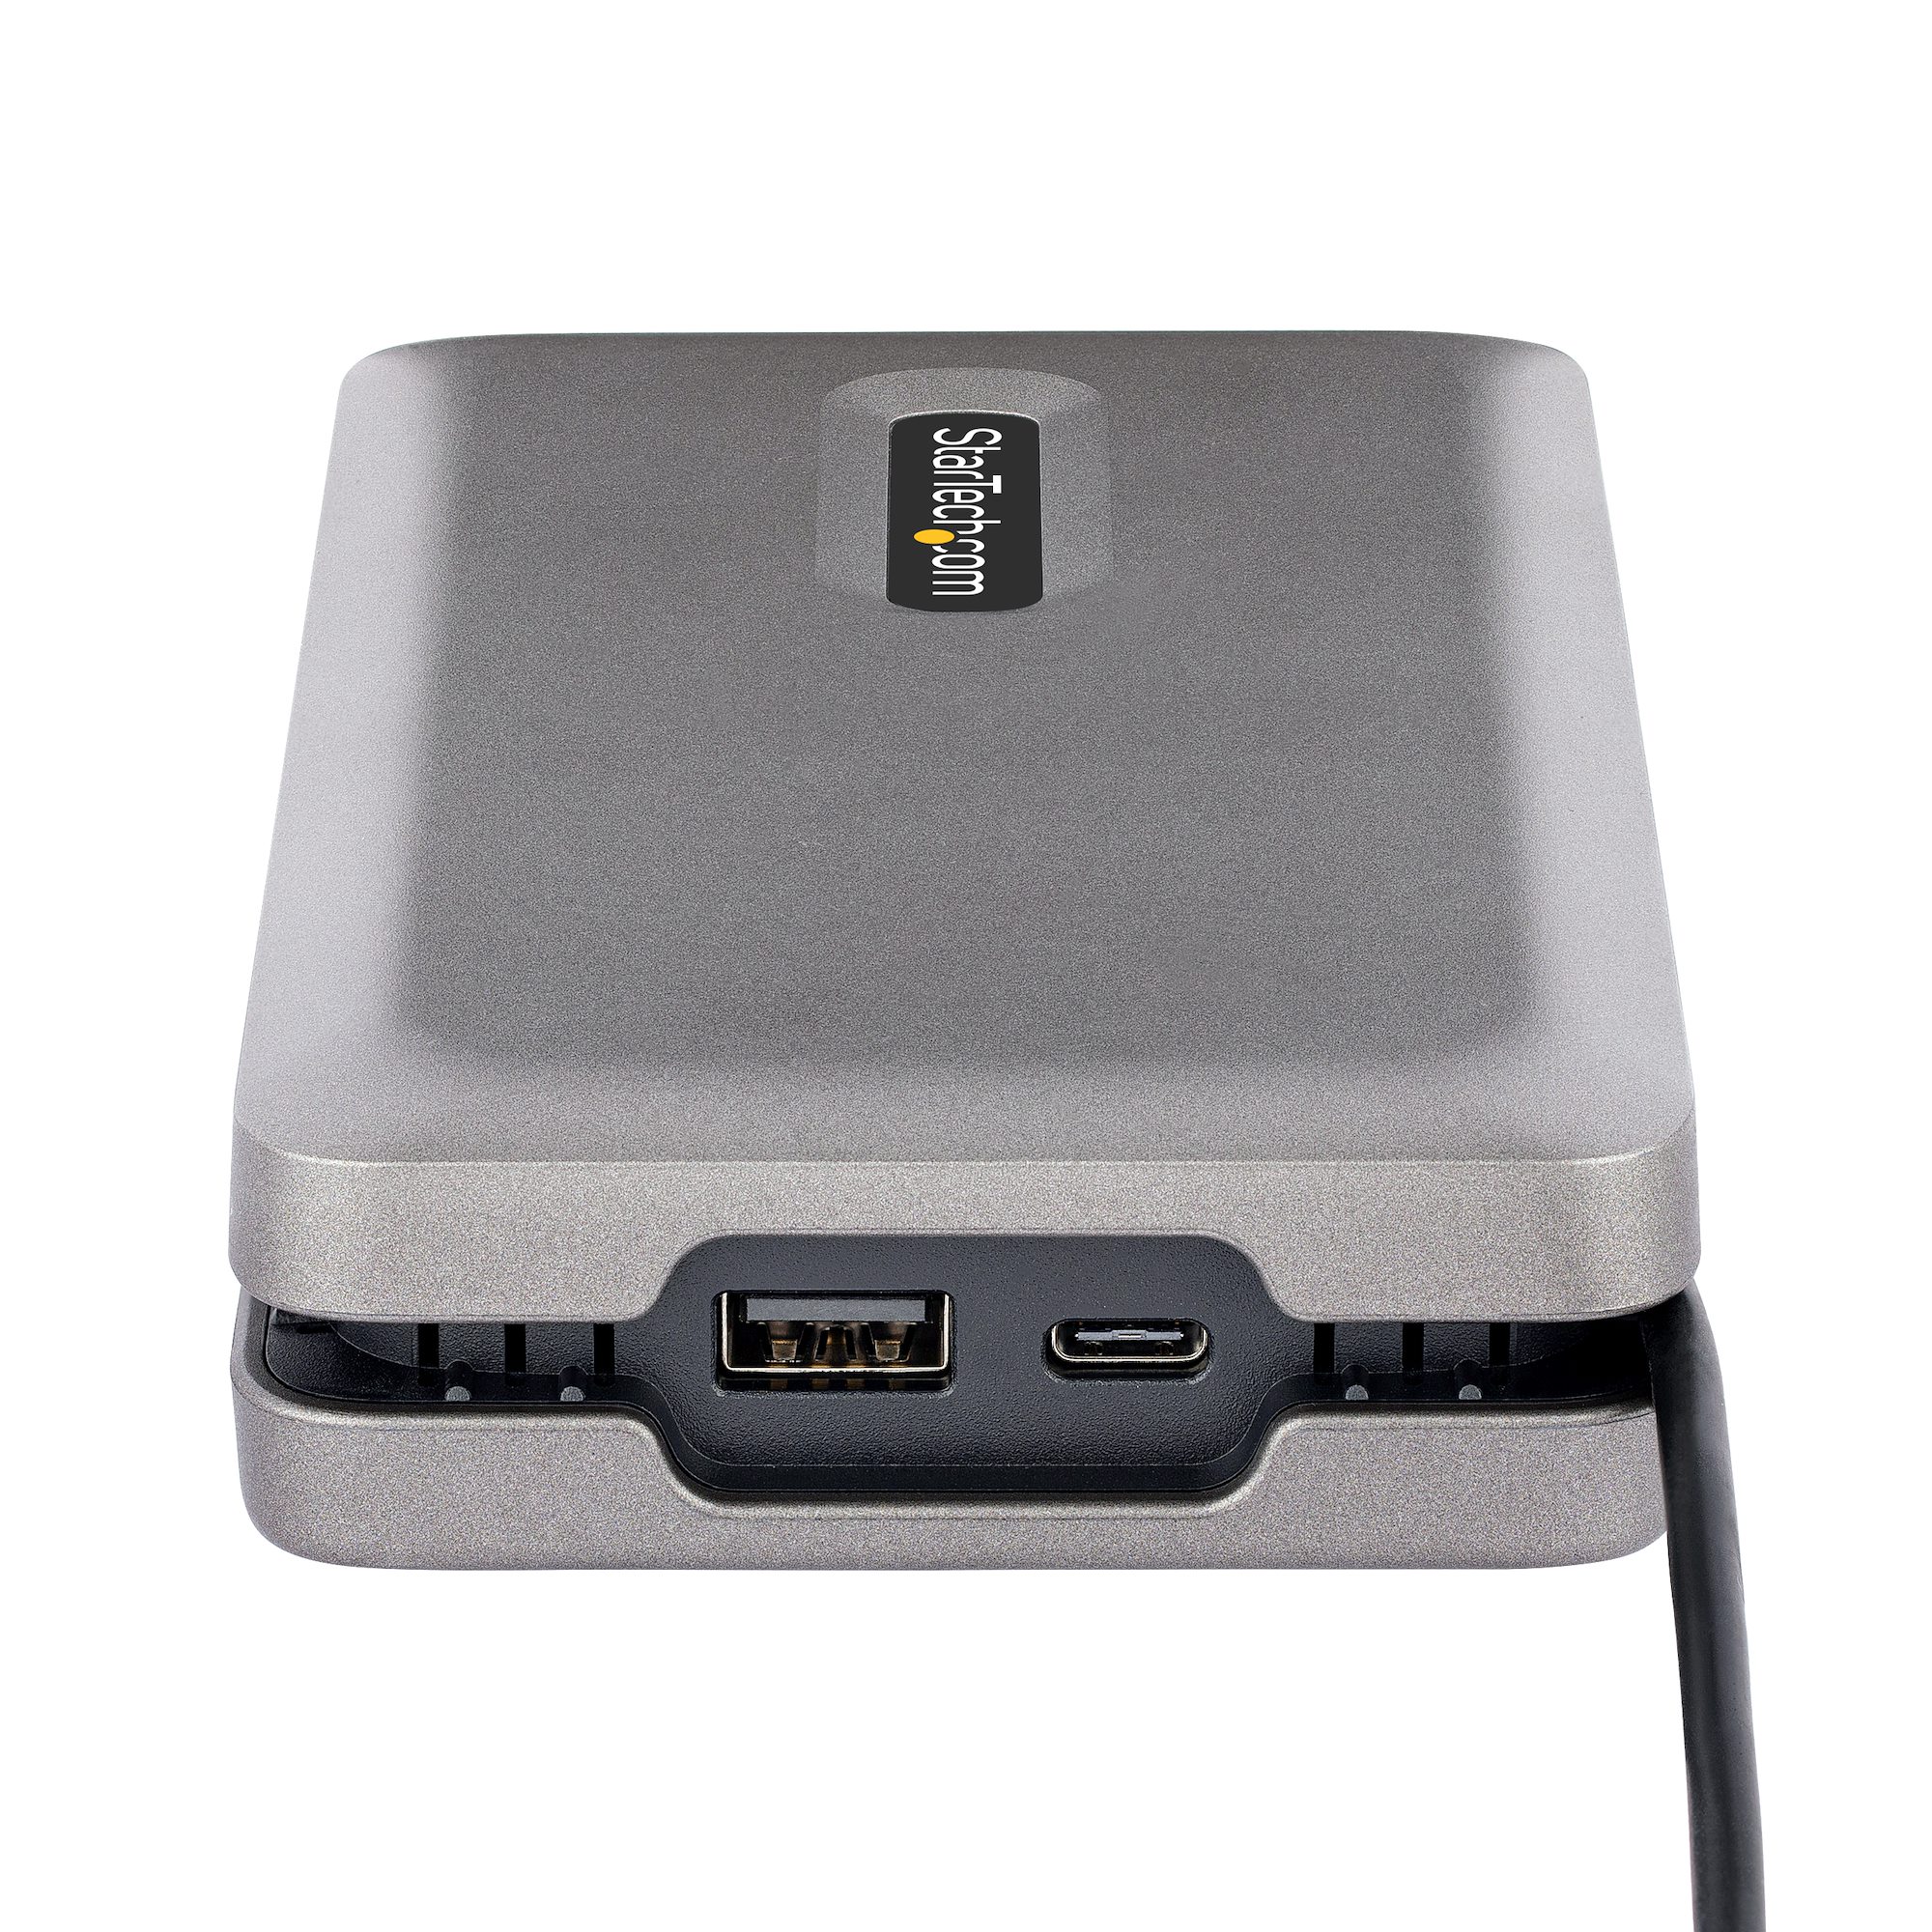 VA-USBC31-HDR4K-003, USB-C Adapter Cable - USB-C to HDMI 2.0 Active  Adapter, 4K60, HDR, HDCP 2.2, DP 1.2 Alt Mode - Black Box